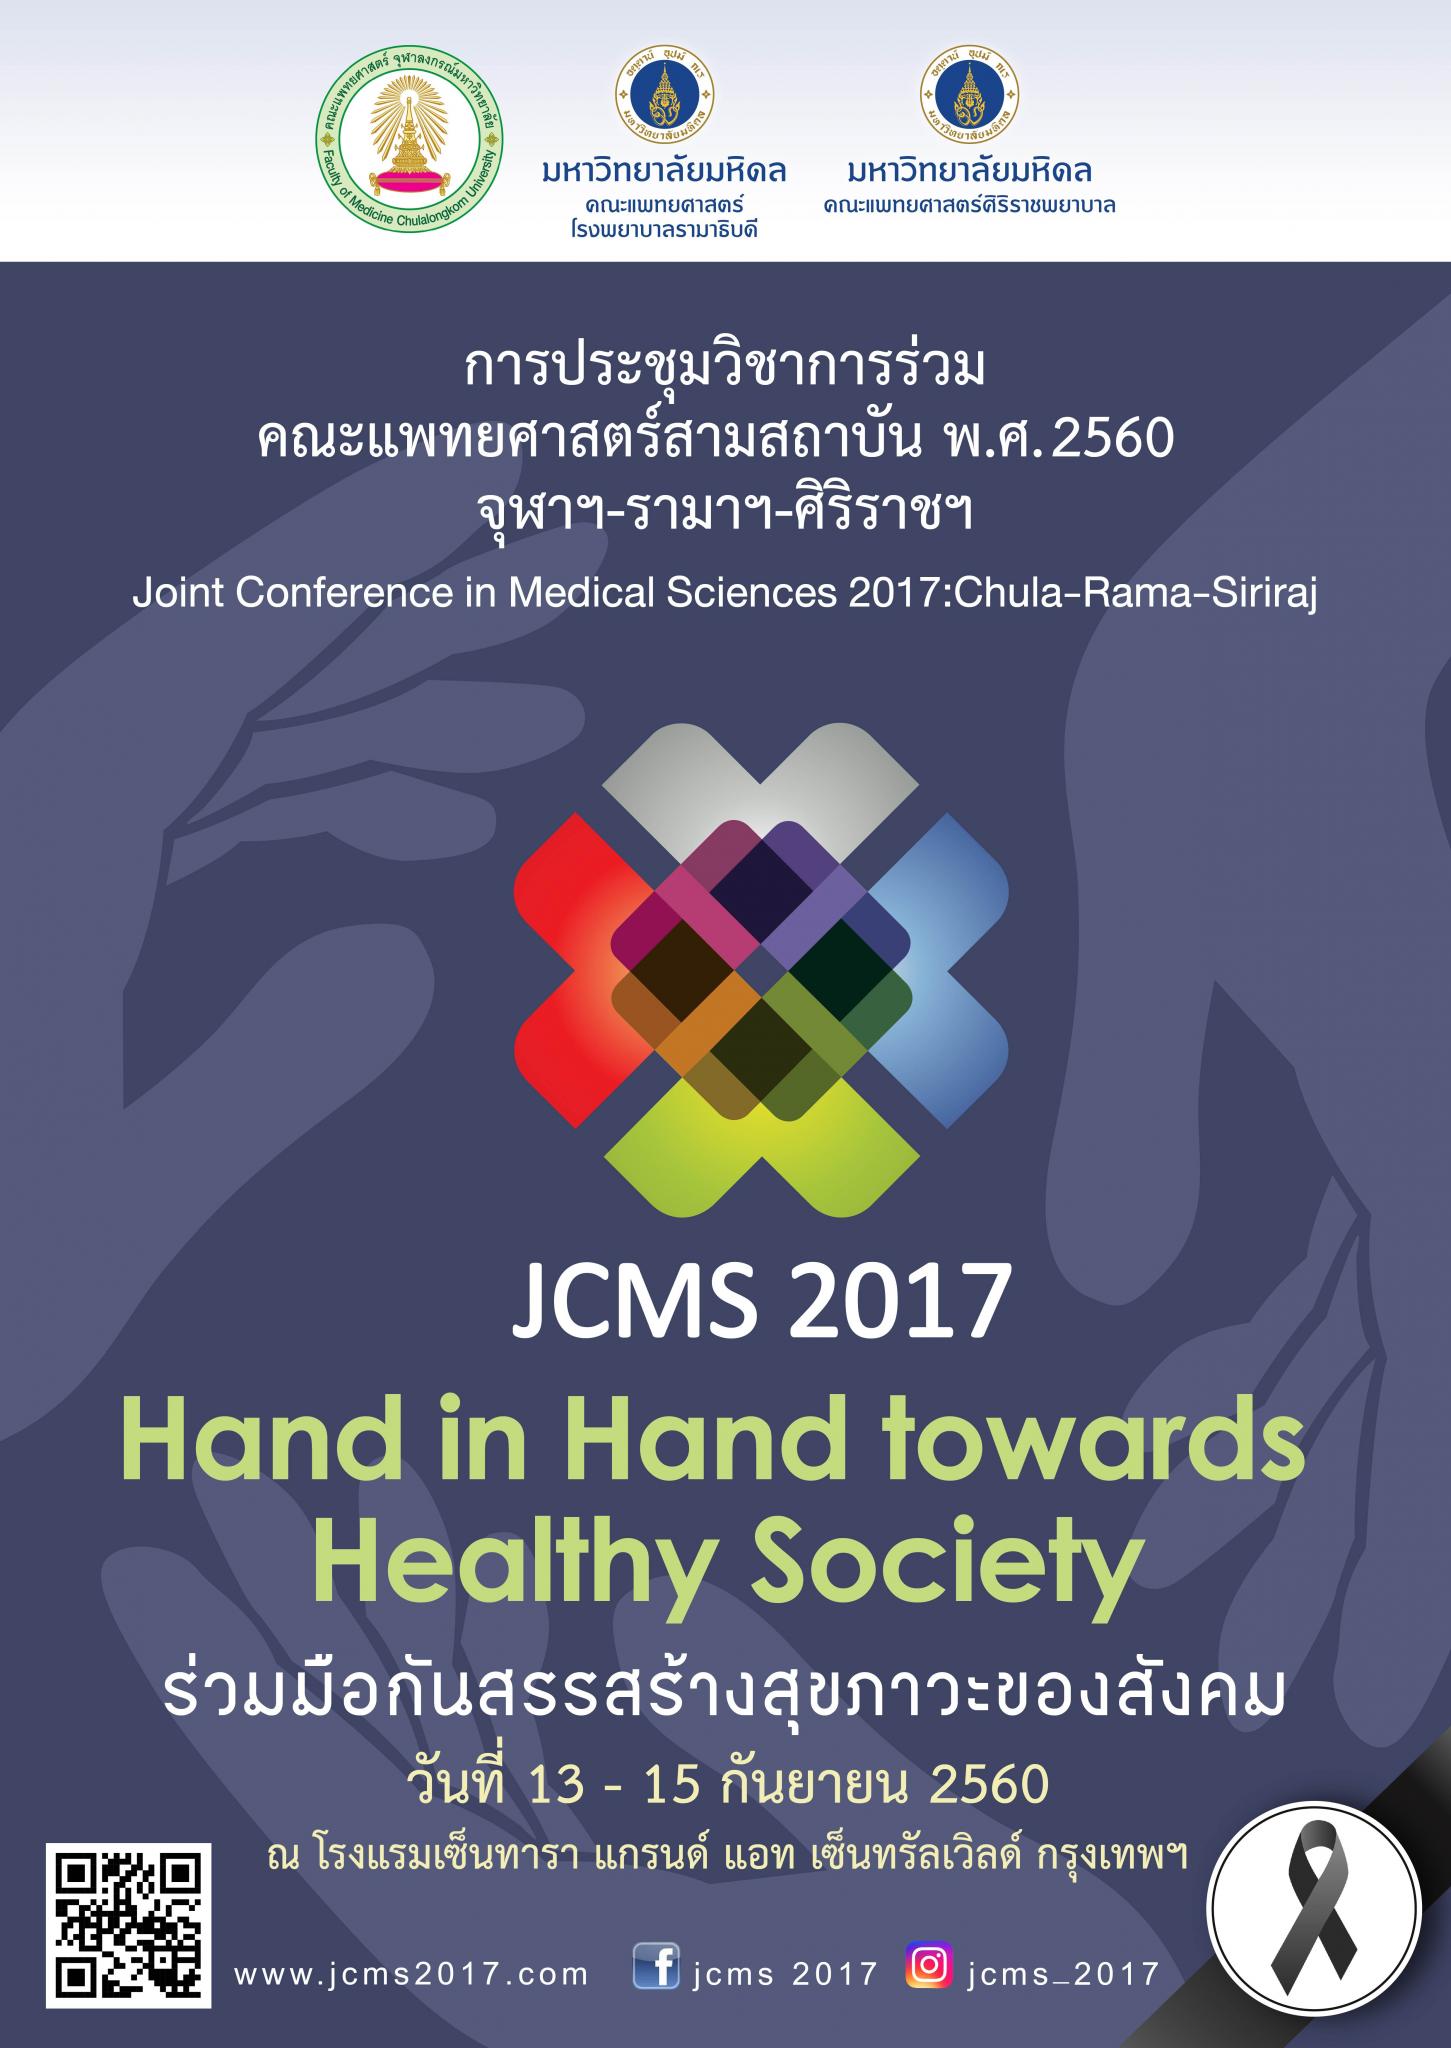 JCMS 2017 : Hand in Hand towards Healthy Society ร่วมมือกันสรรสร้างสุขภาวะของสังคม